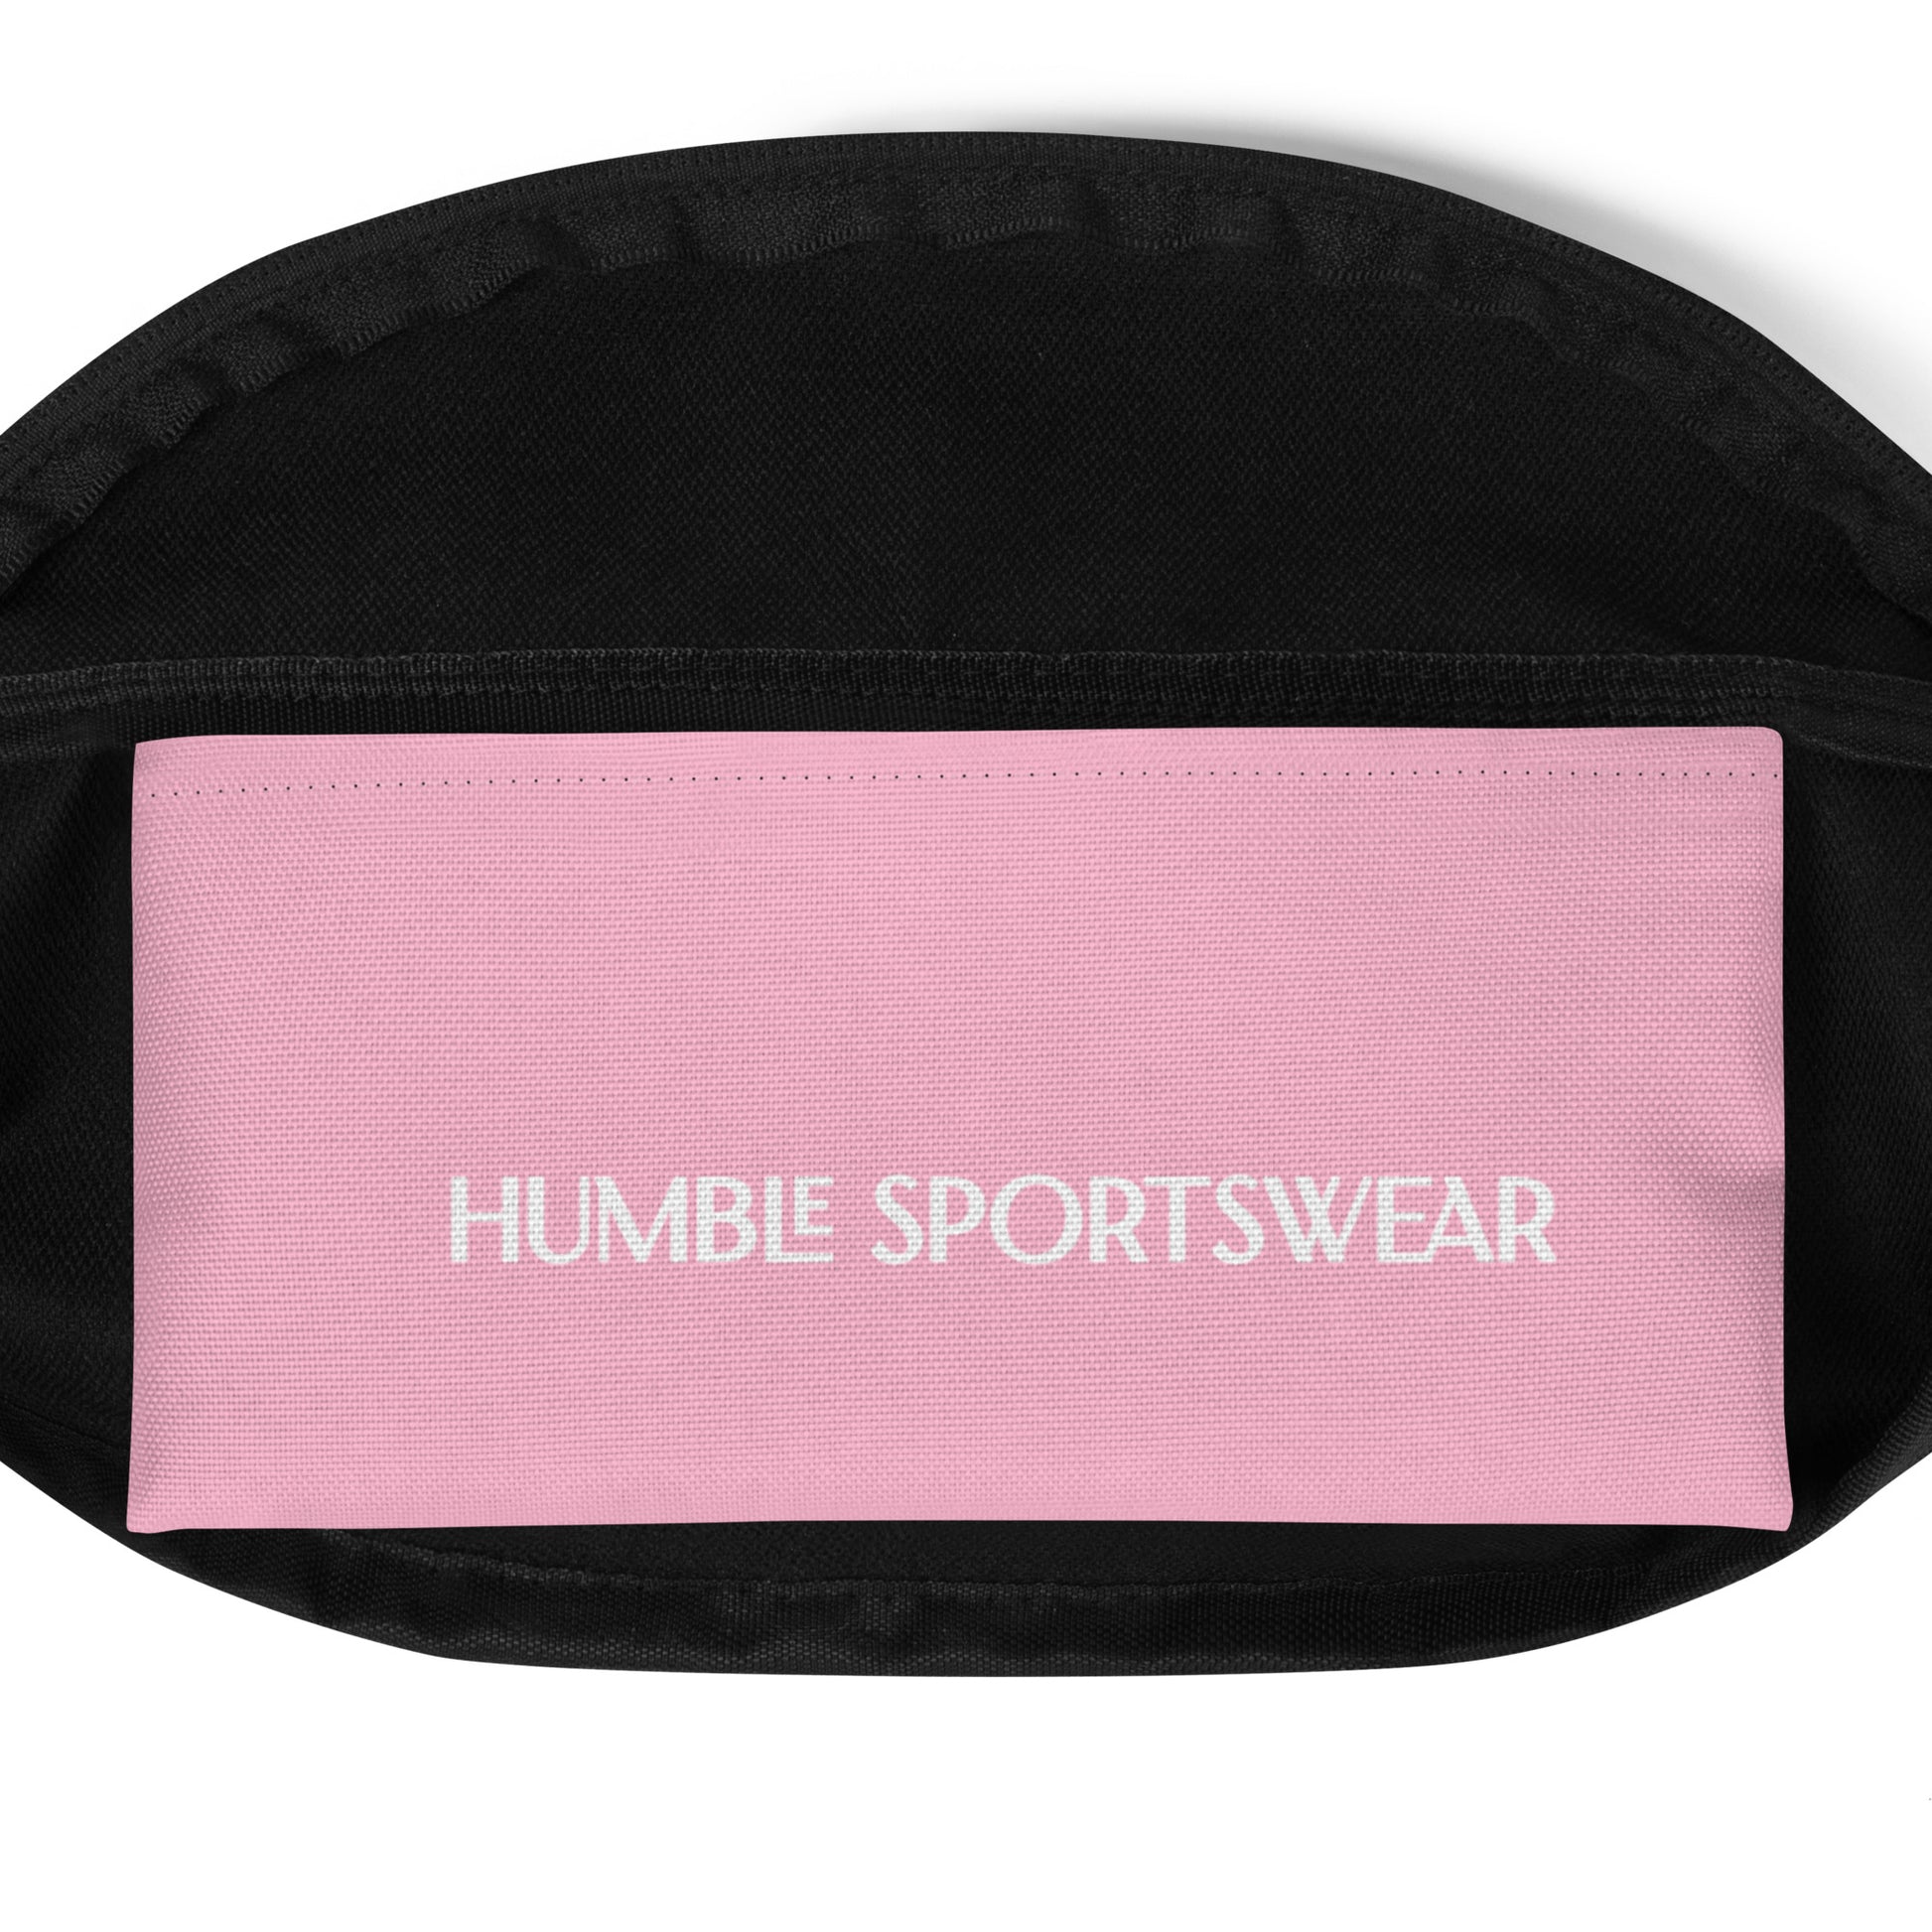 Humble Sportswear, unisex bags, Fanny packs, belt bag, waist bags, adjustable Fanny packs